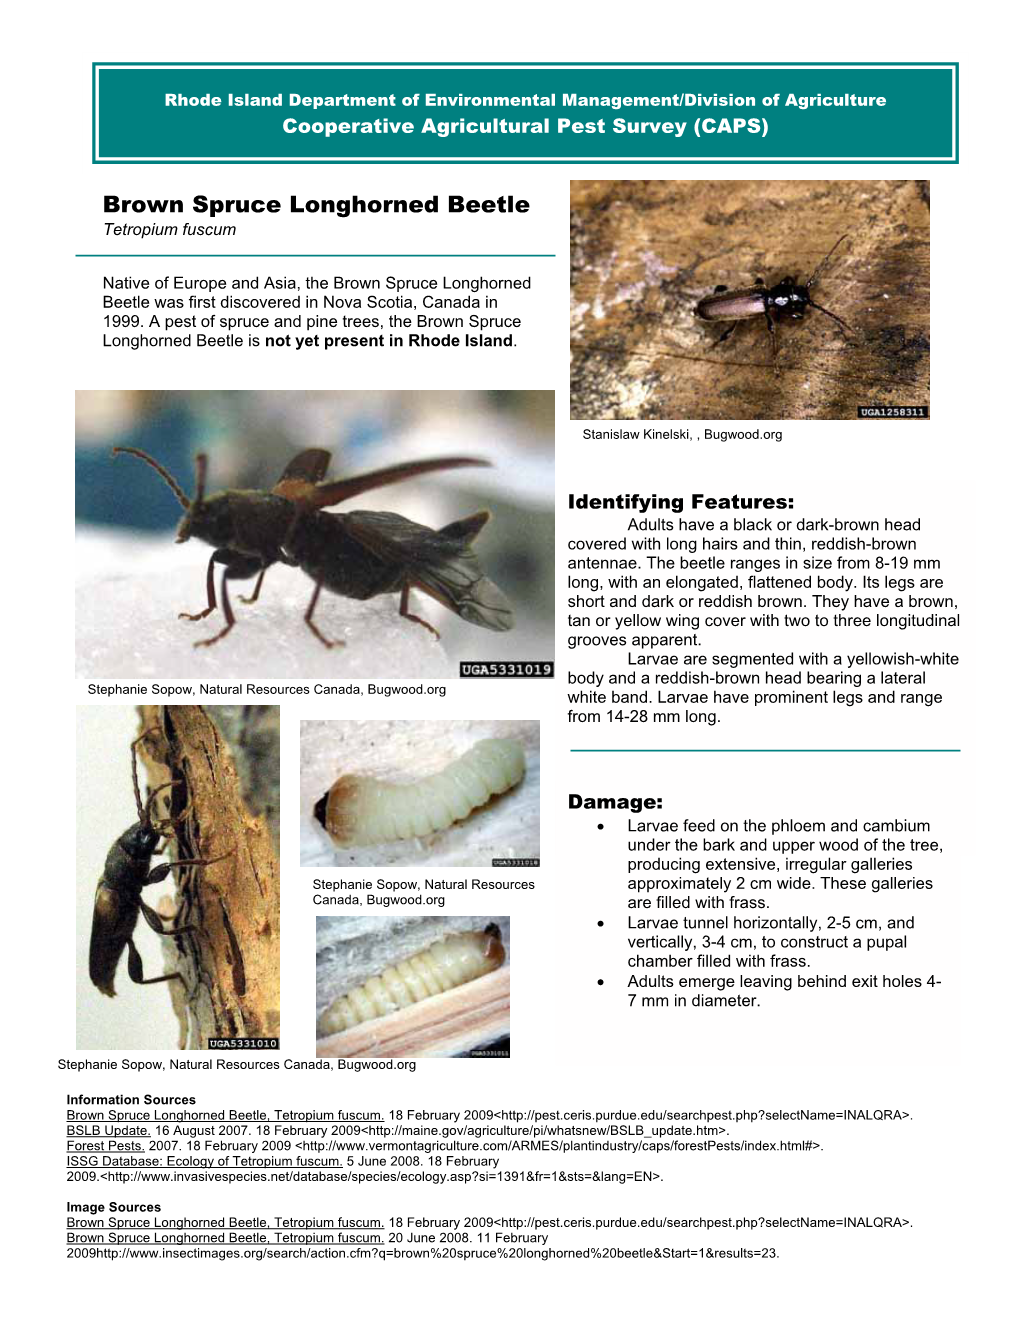 RI DEM/Agriculture Brown Spruce Longhorned Beetle Fact Sheet